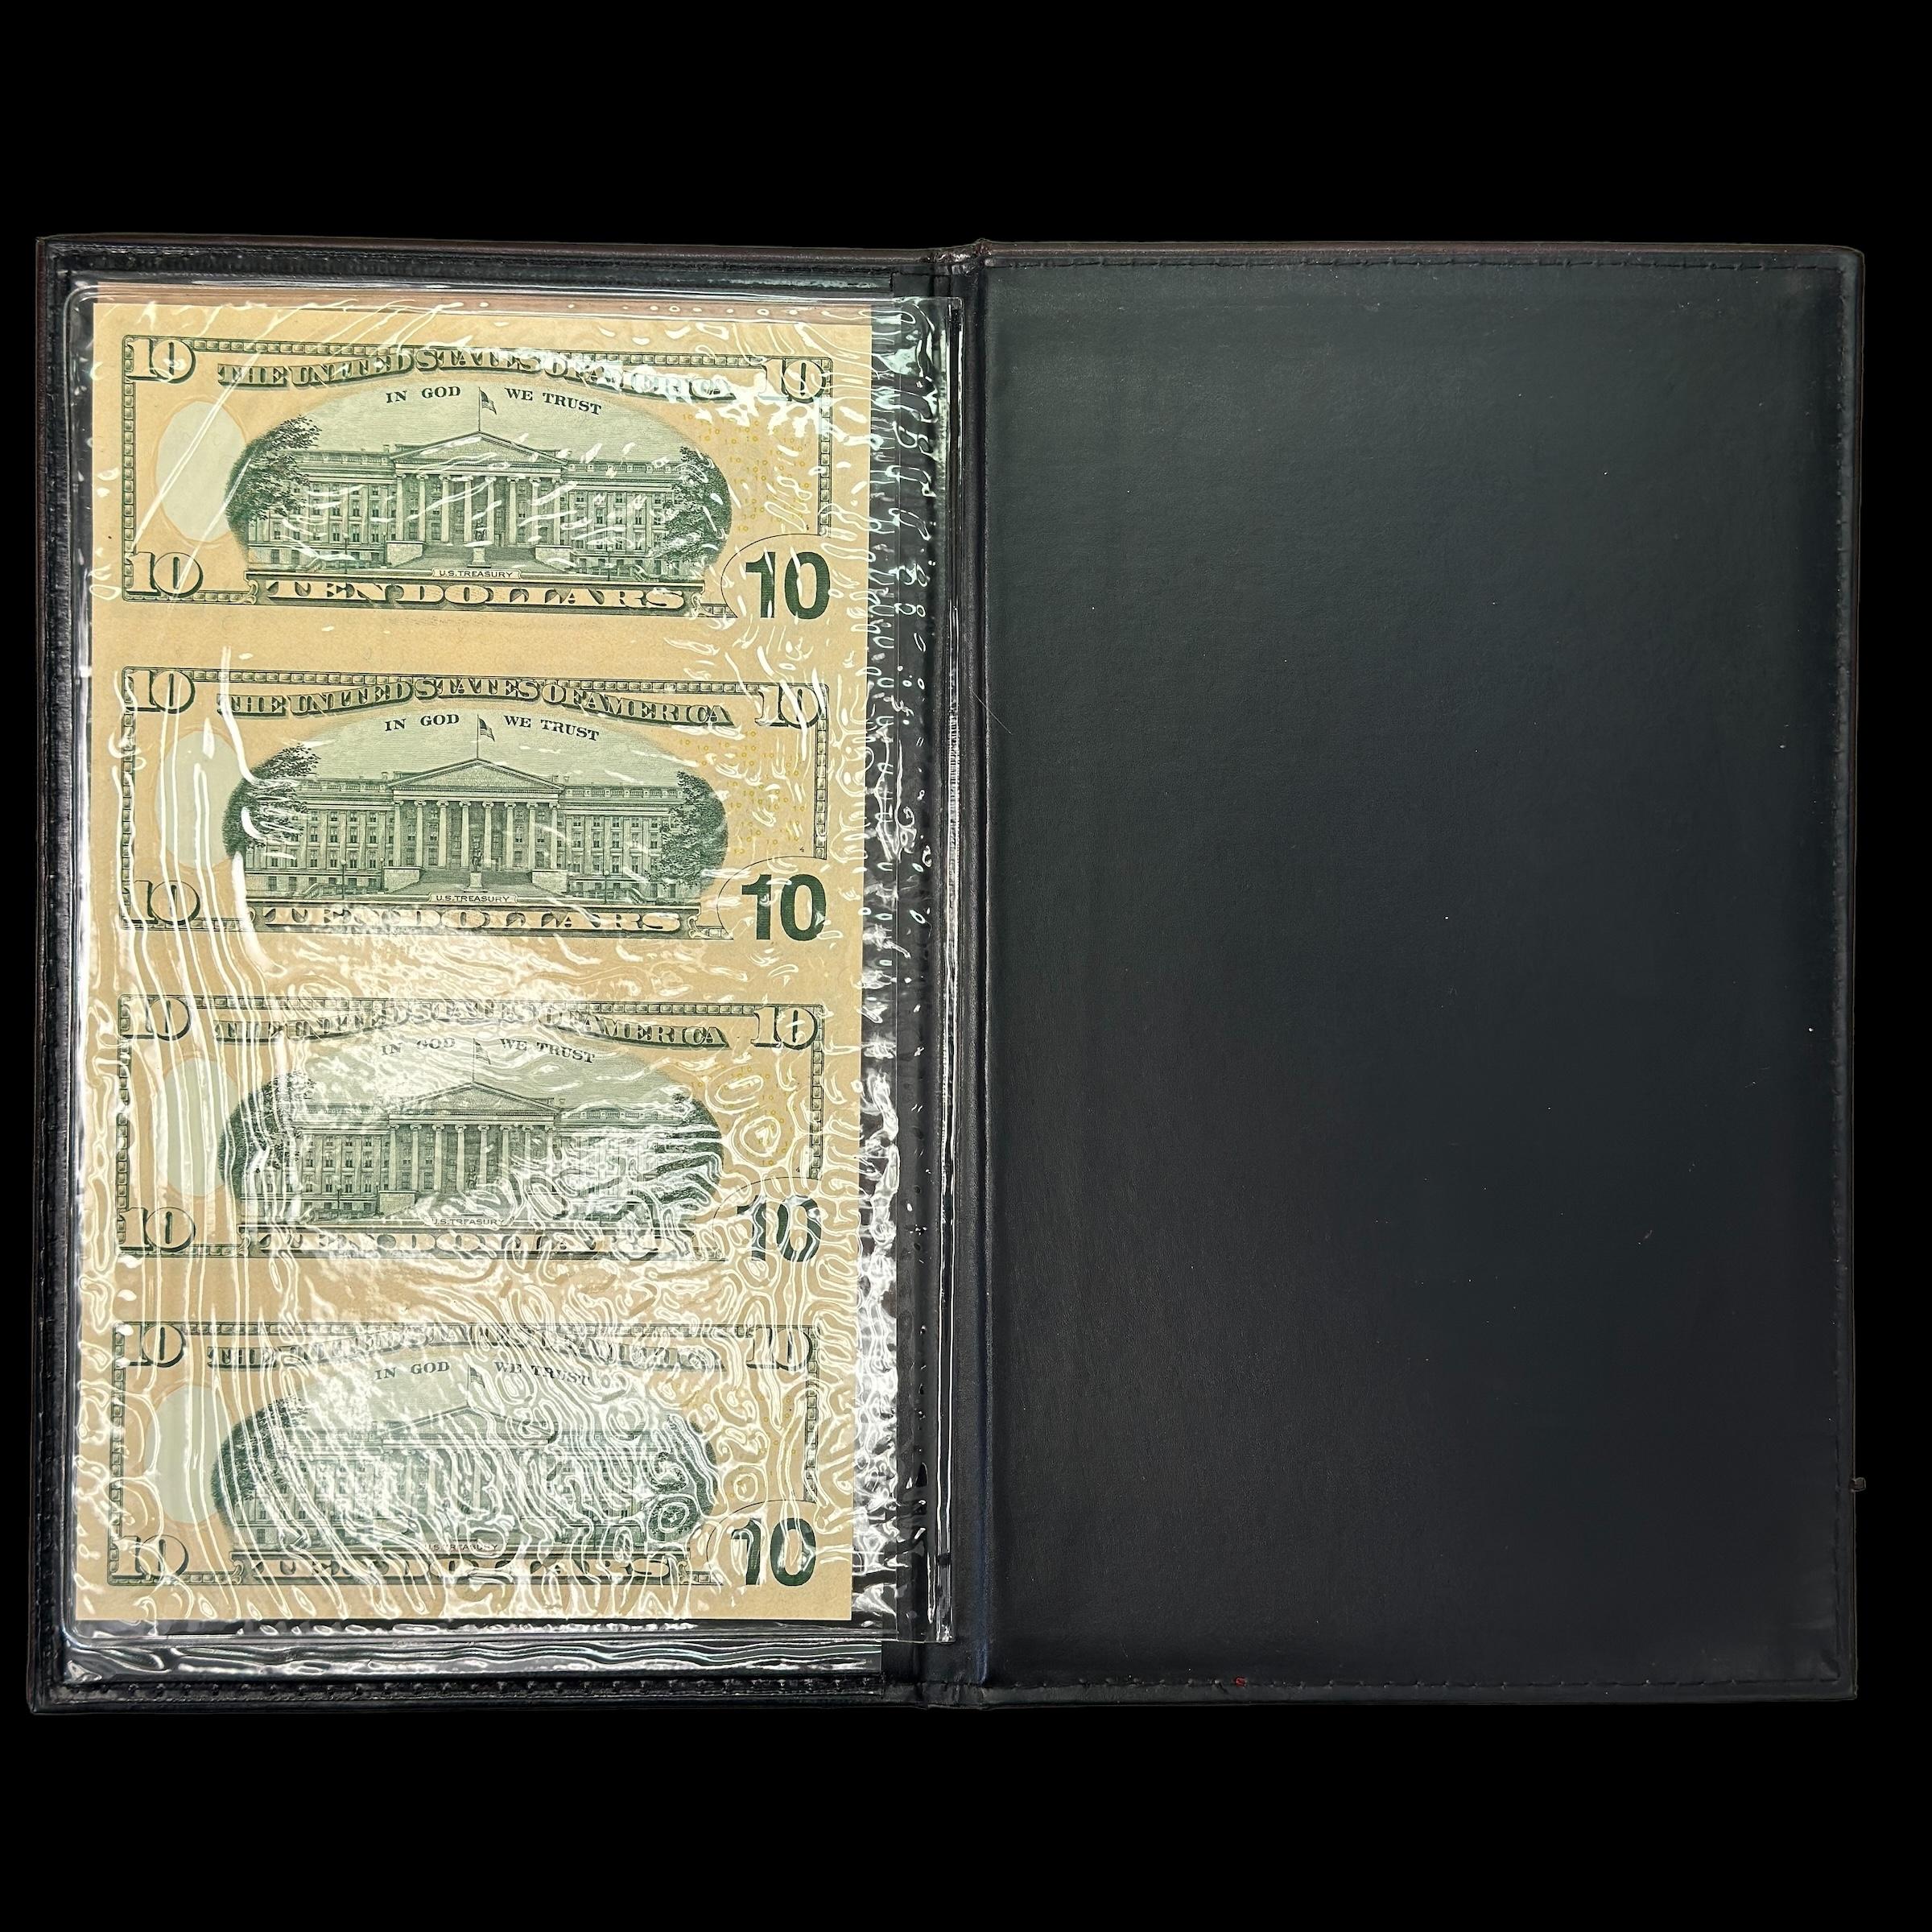 Uncut sheet of 4 2006 U.S. green seal $10 Federal Reserve banknotes